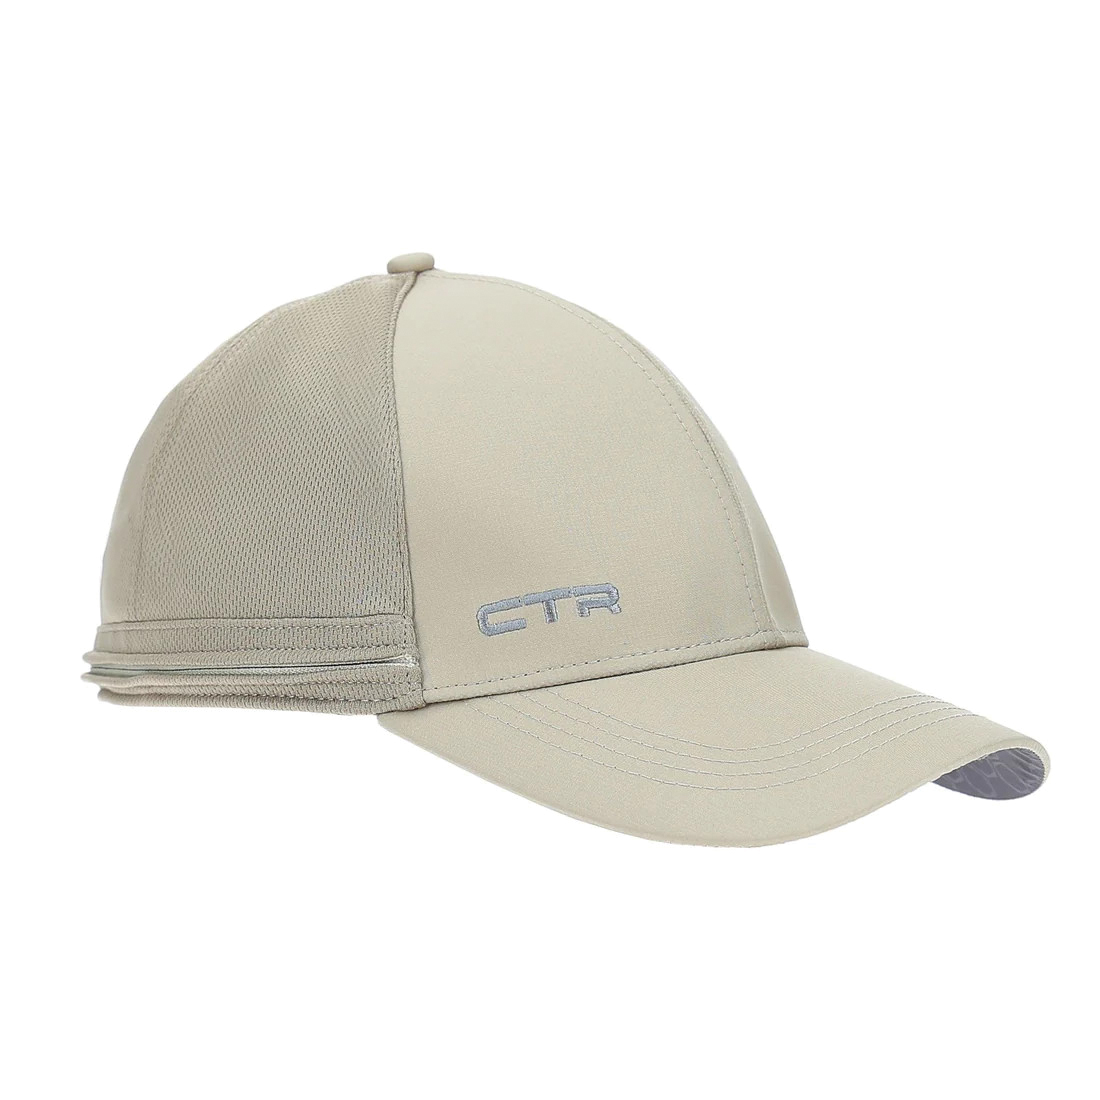 Chaos Headwear/CTR 1353-007-L/XL 103509596